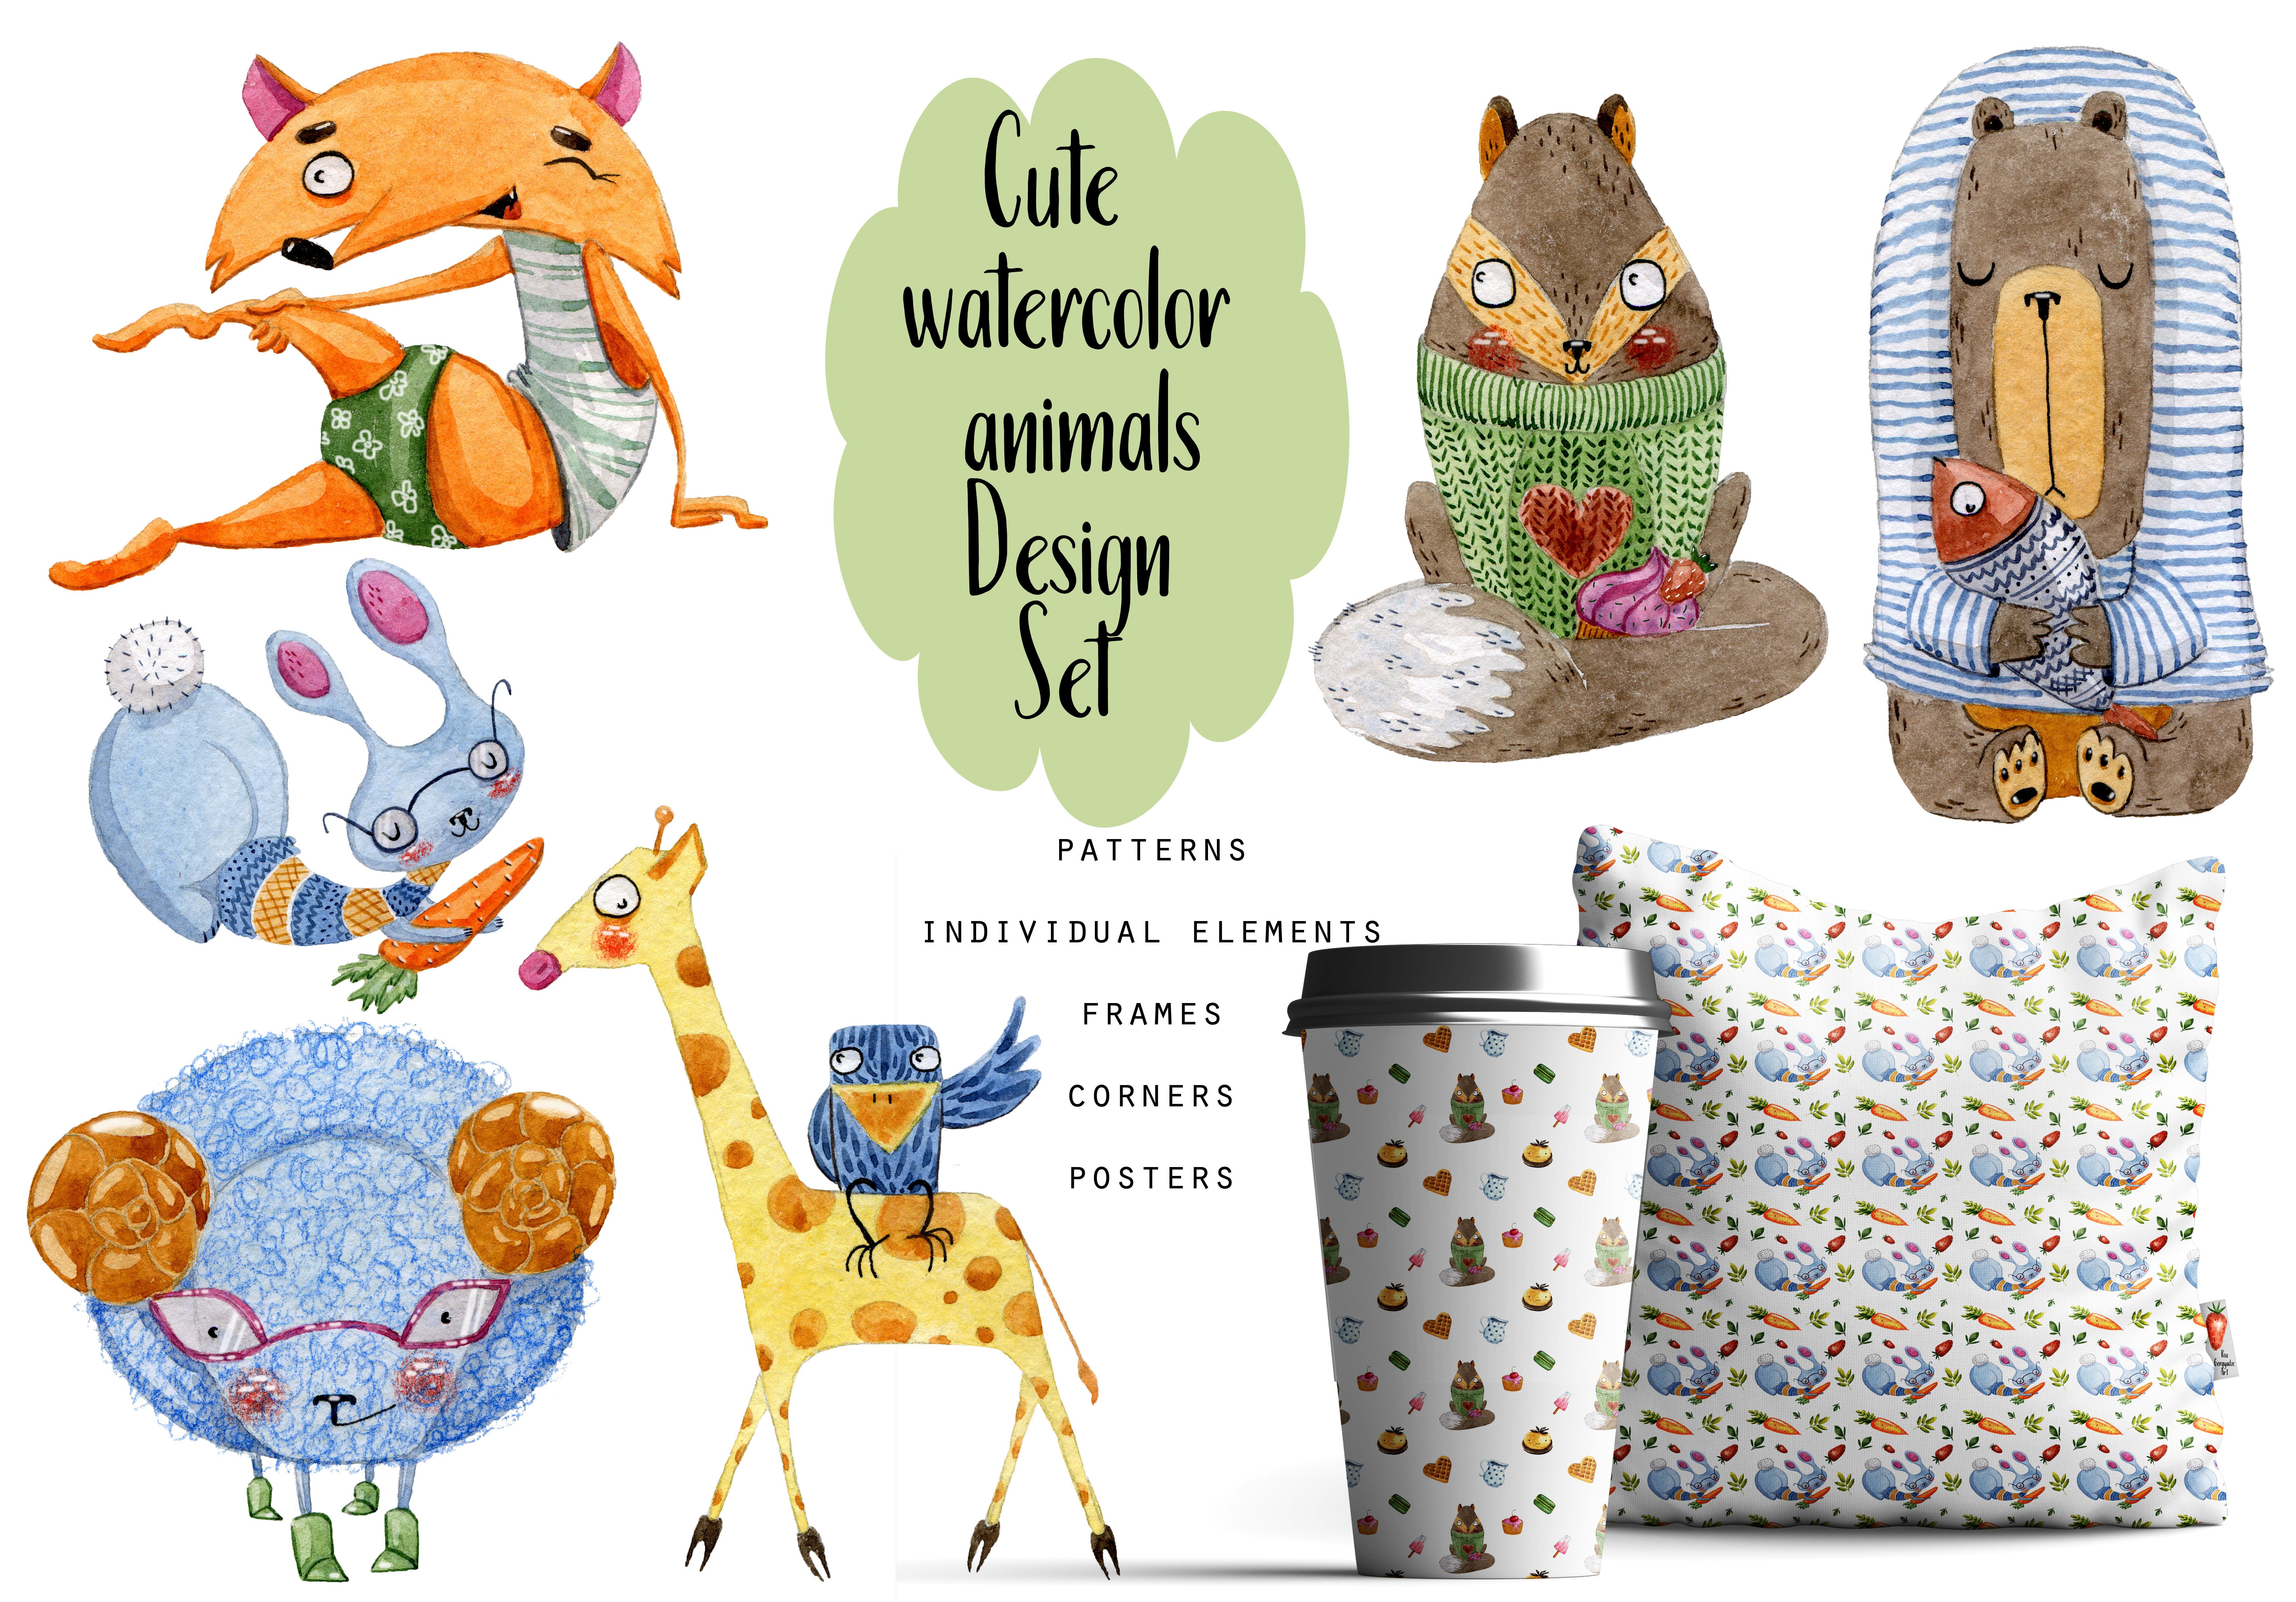 Cute watercolor animals Design Set cover image.